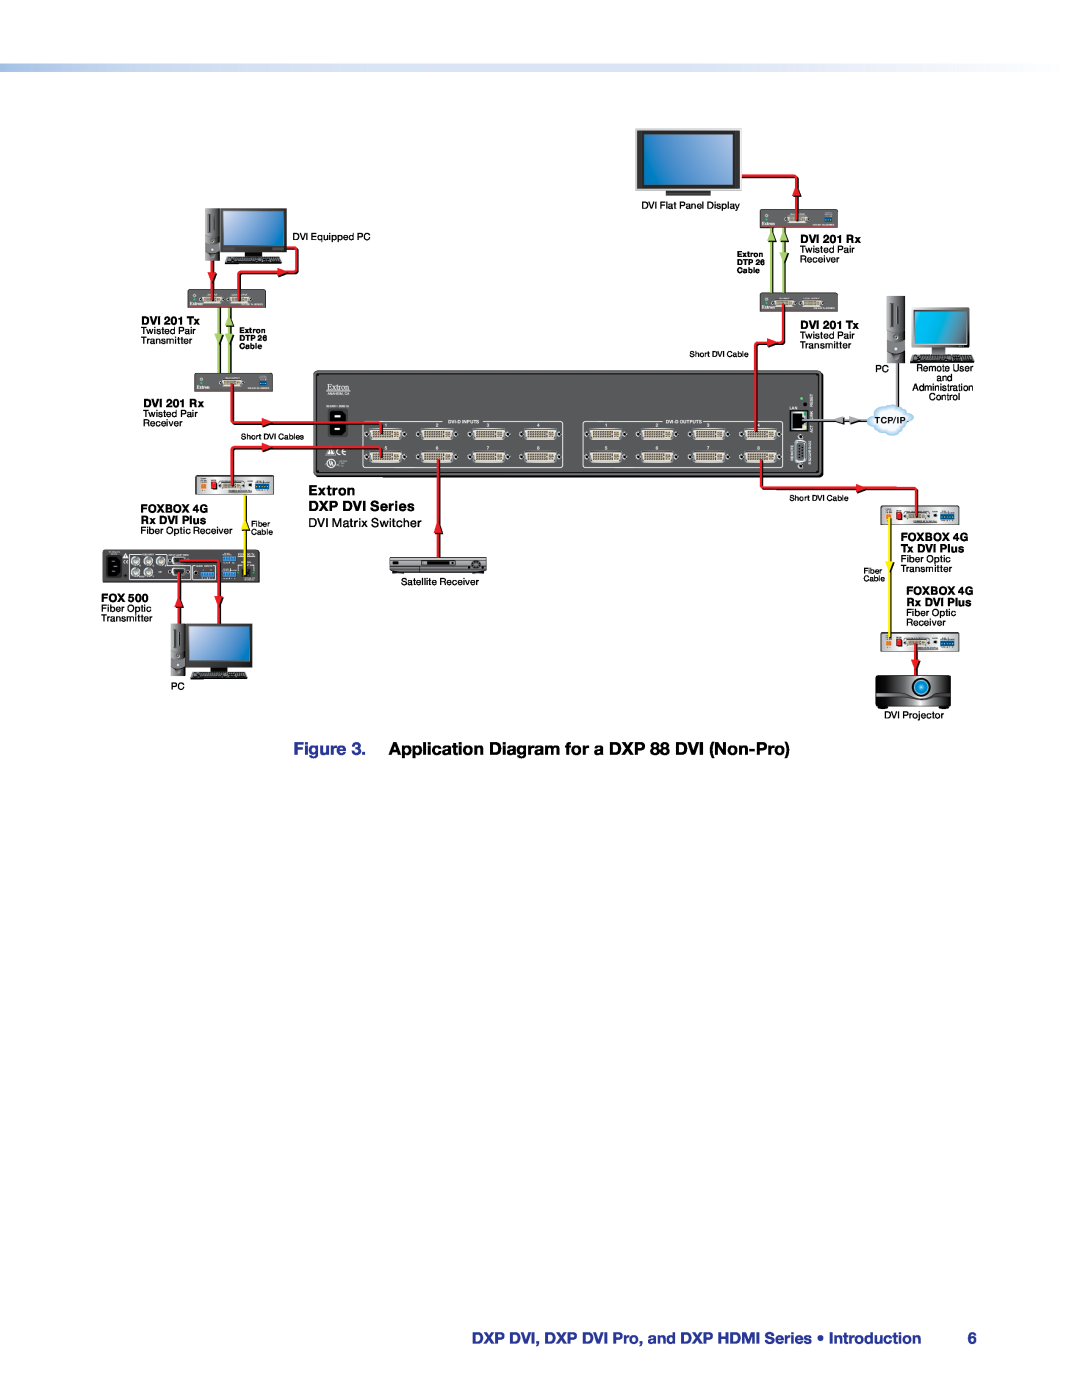 Extron electronic DXP DVI PRO Application Diagram for a DXP 88 DVI Non-Pro, Extron, DXP DVI Series, DVI 201 Tx, DVI 201 Rx 